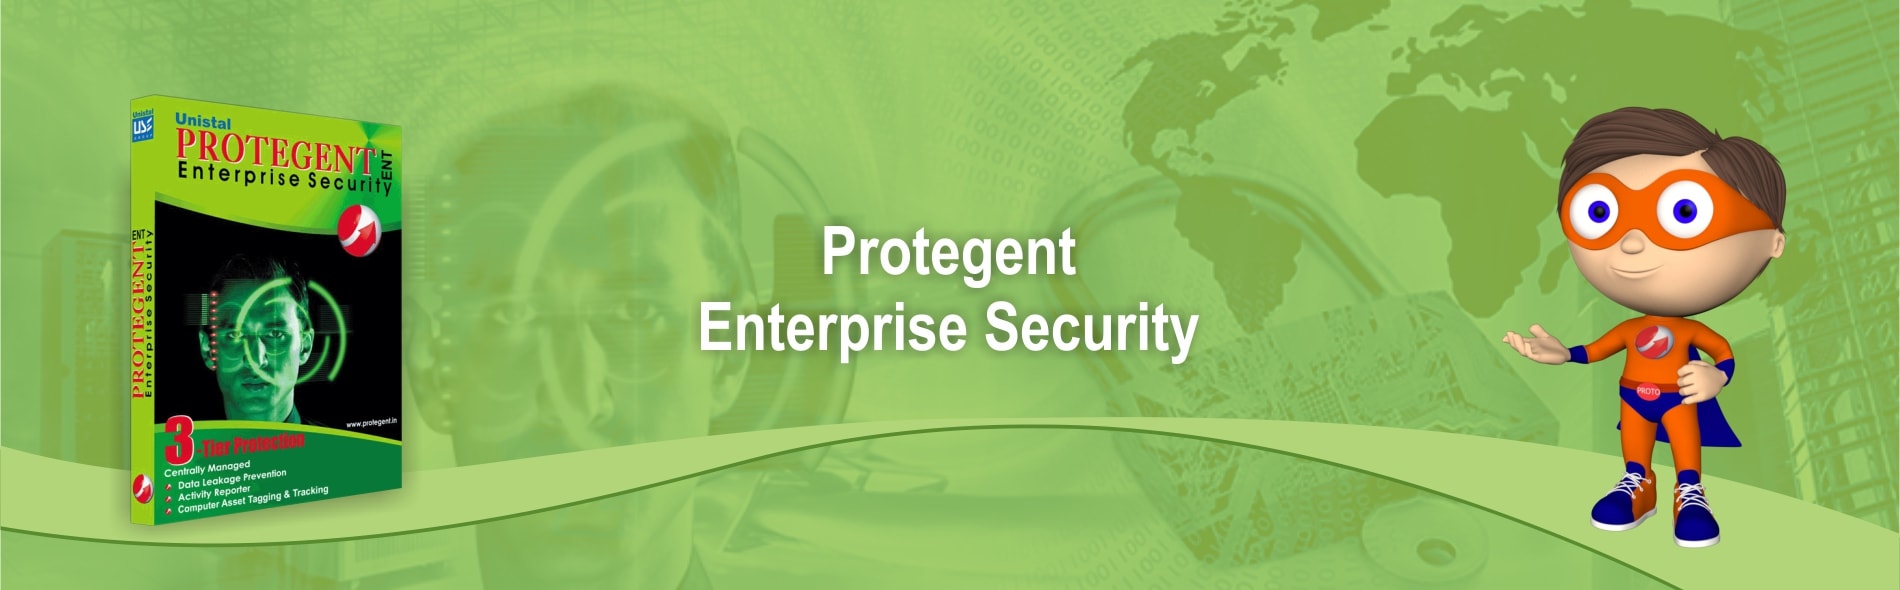 Enterprise-security